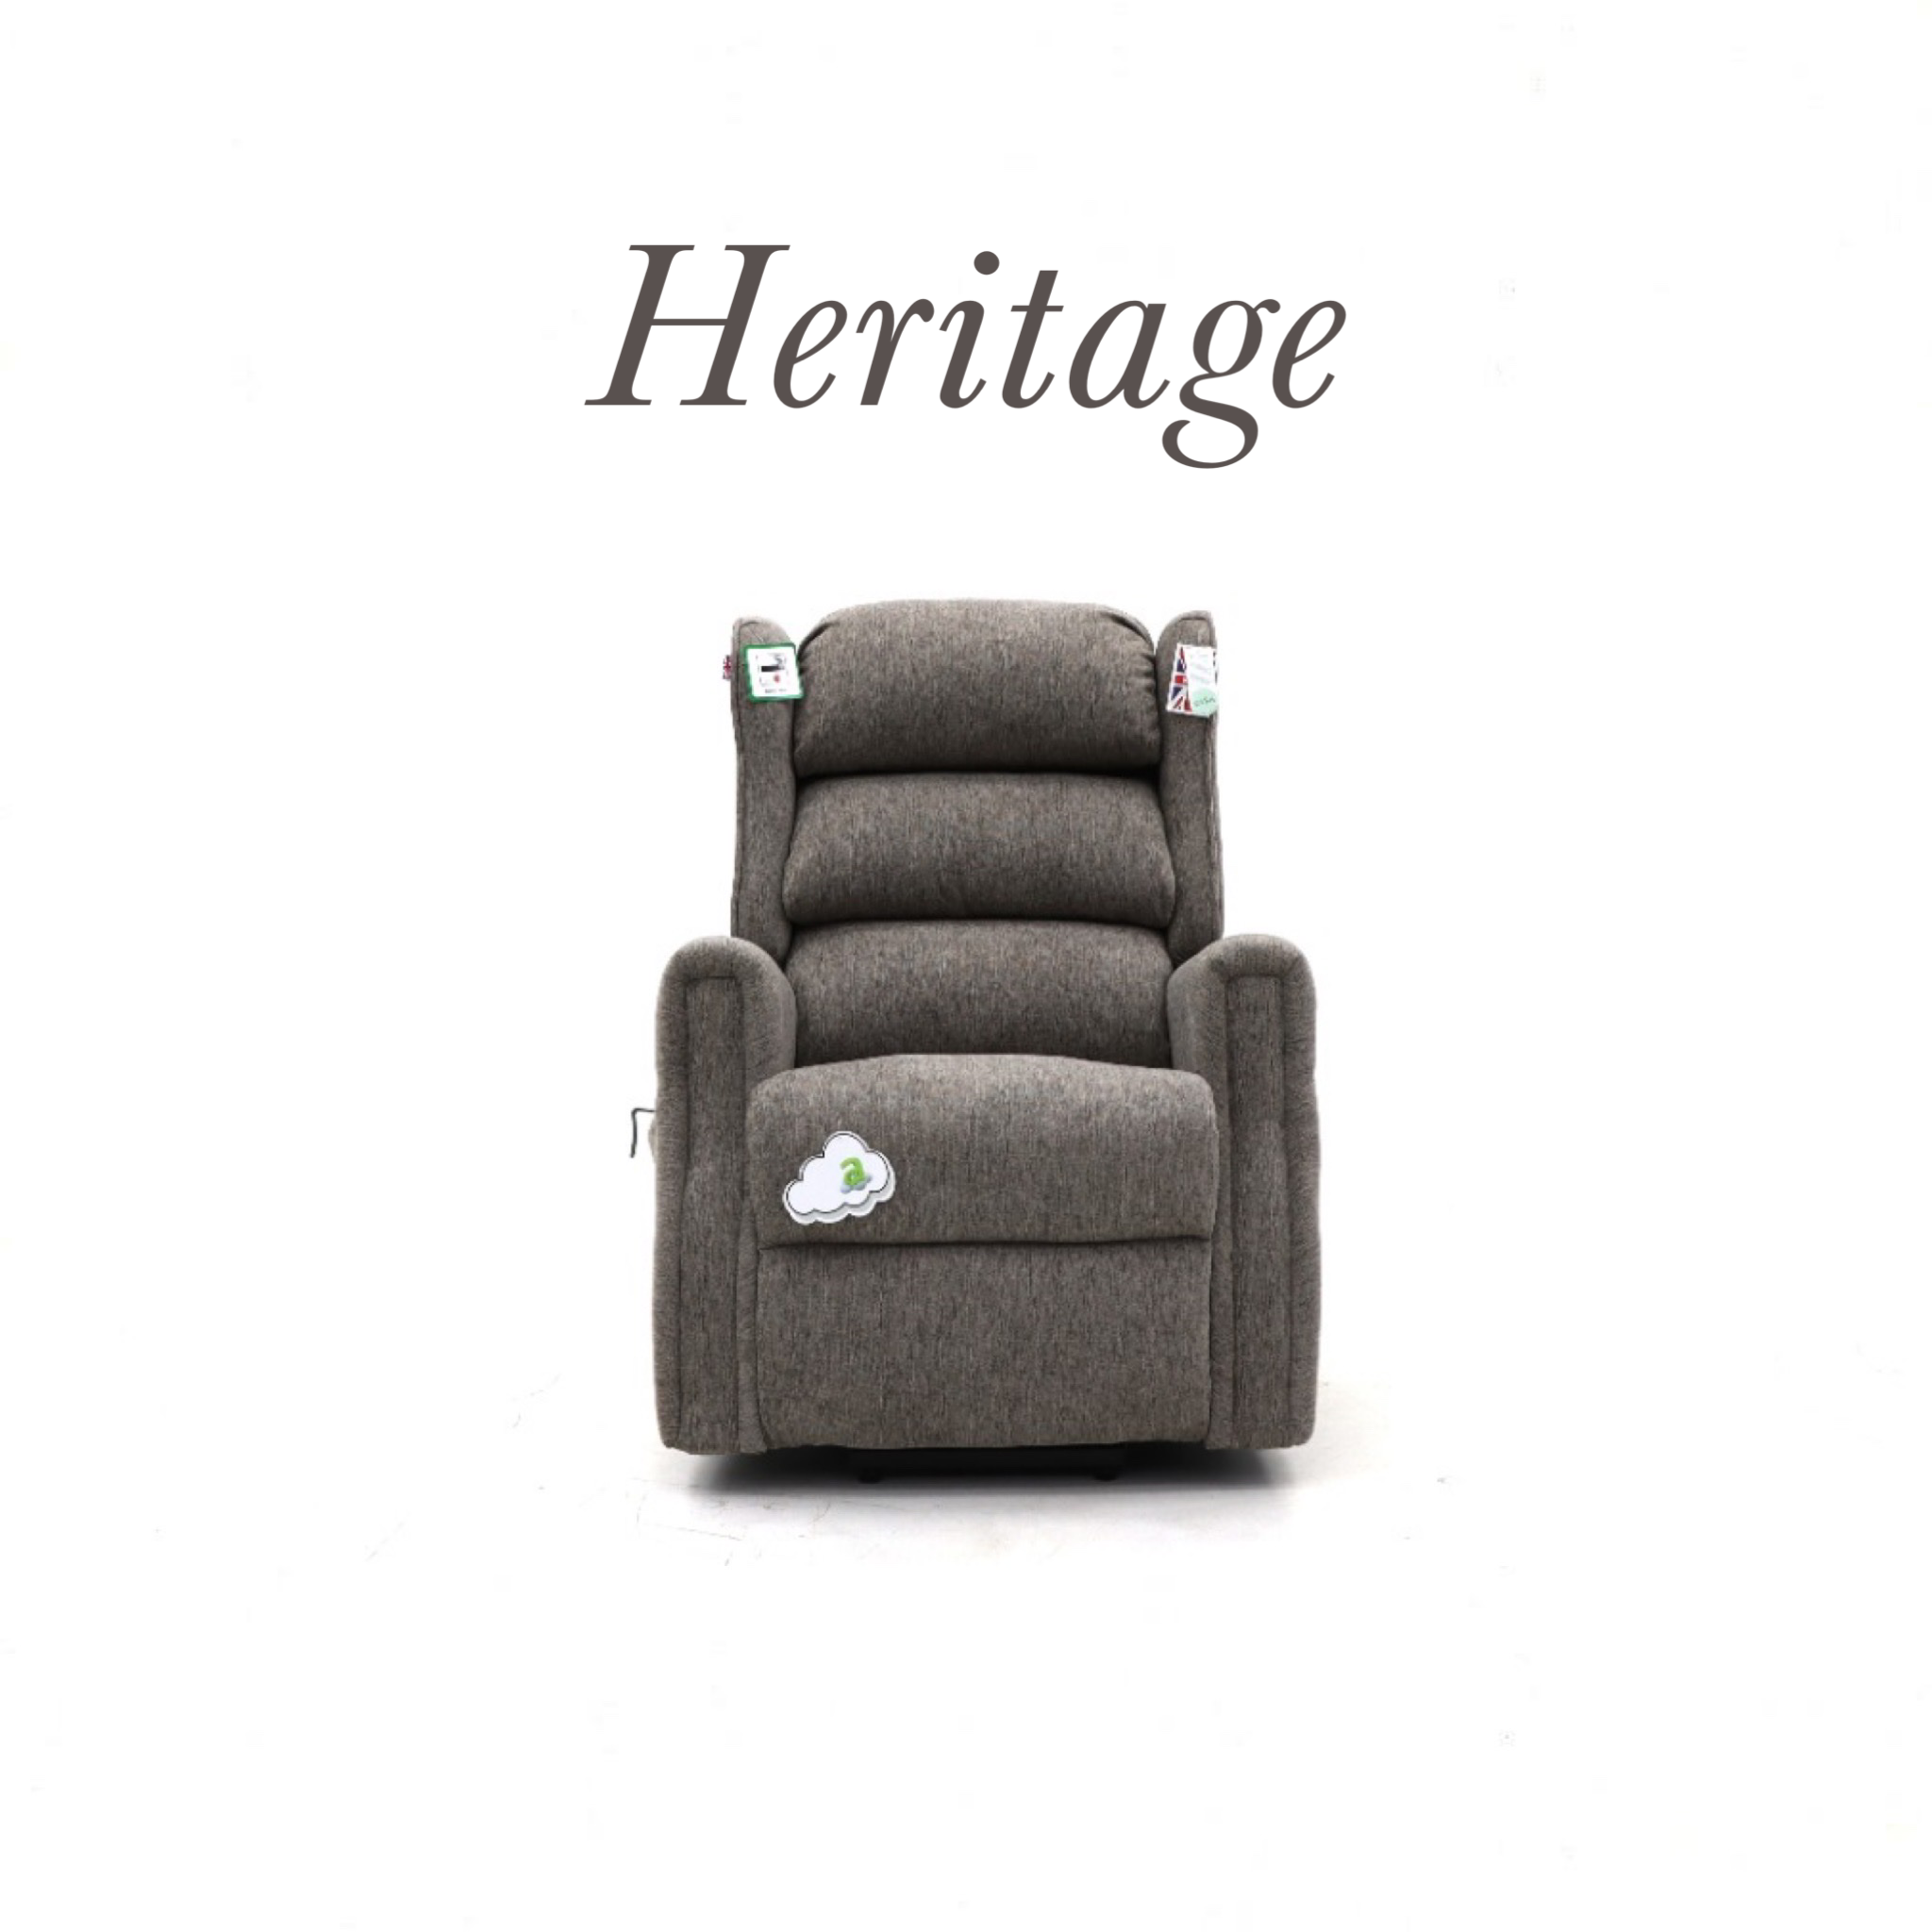 Heritage Riser Recline Dual Motor Chair